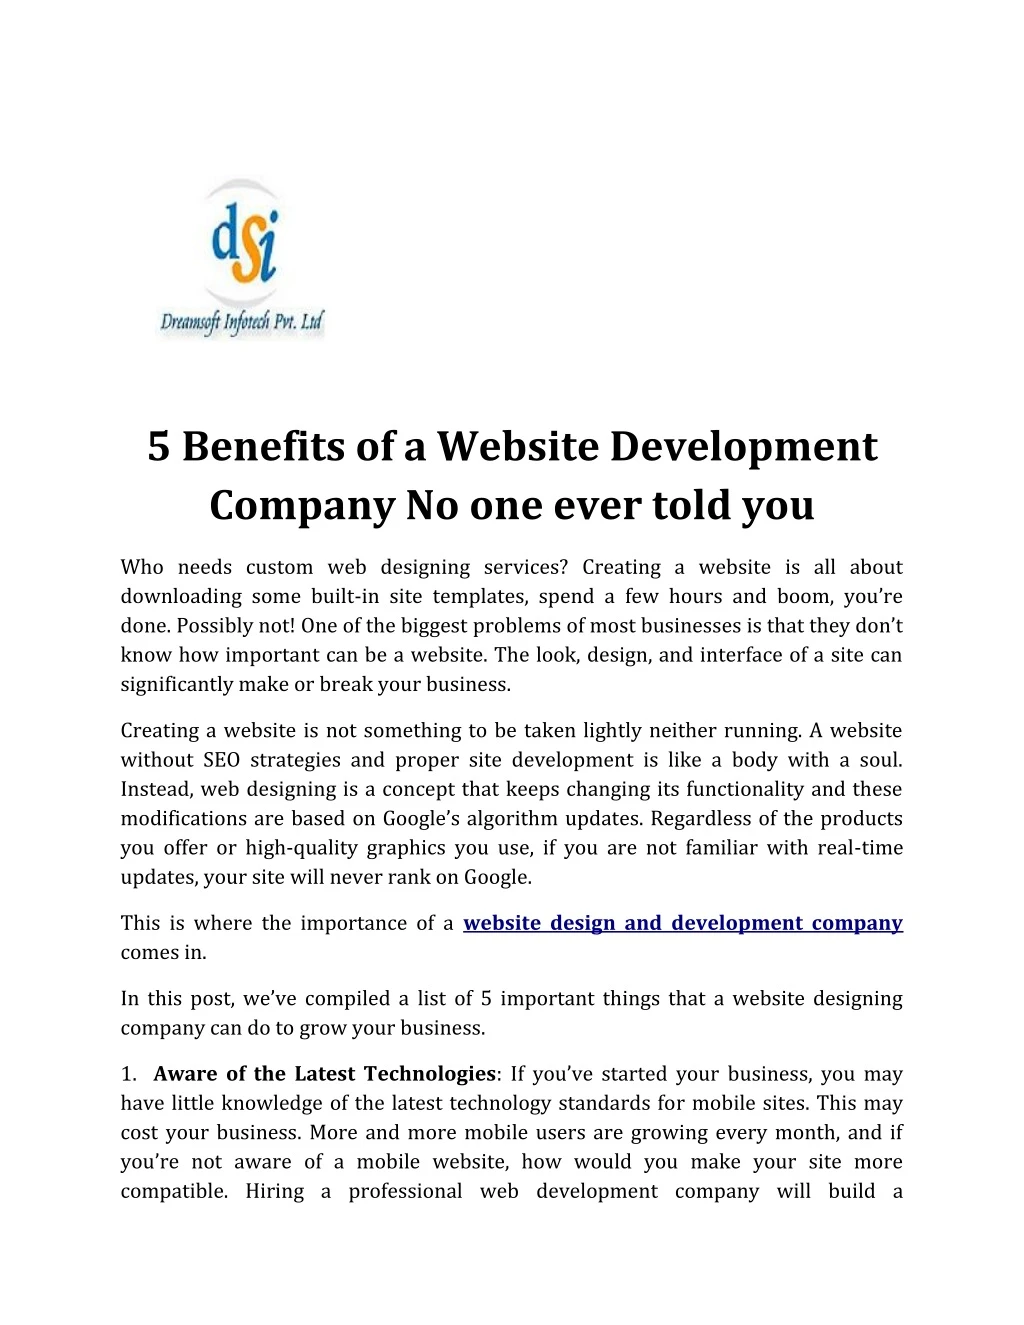 5 benefits of a website development company